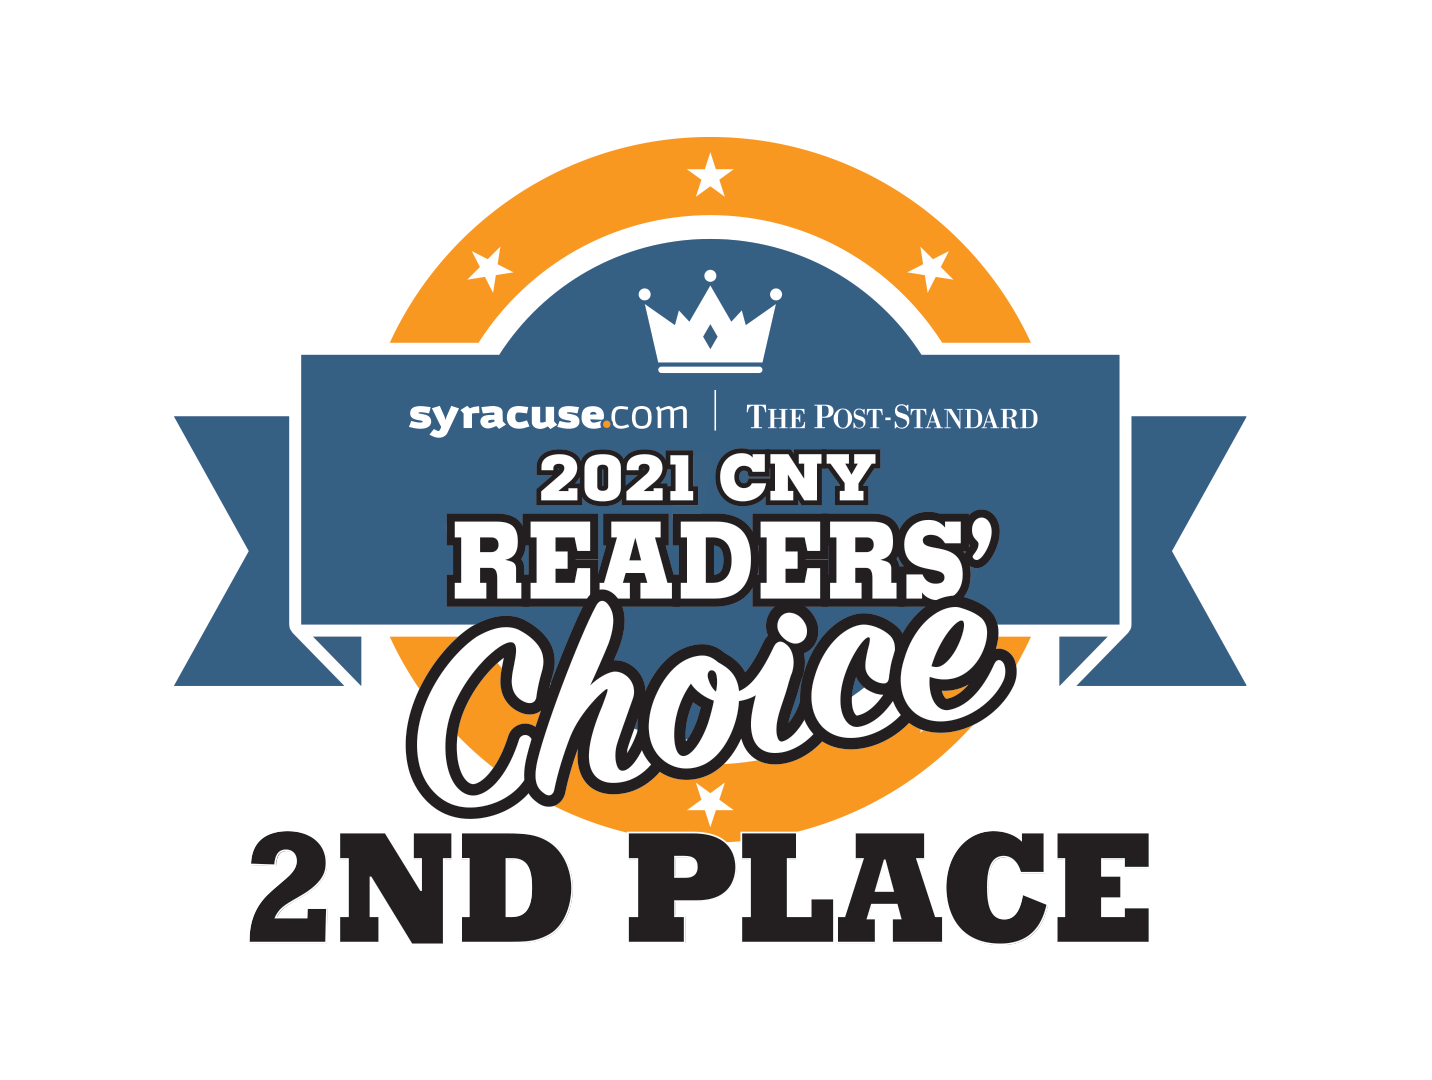 2nd place Syracuse.com Reader's Choice